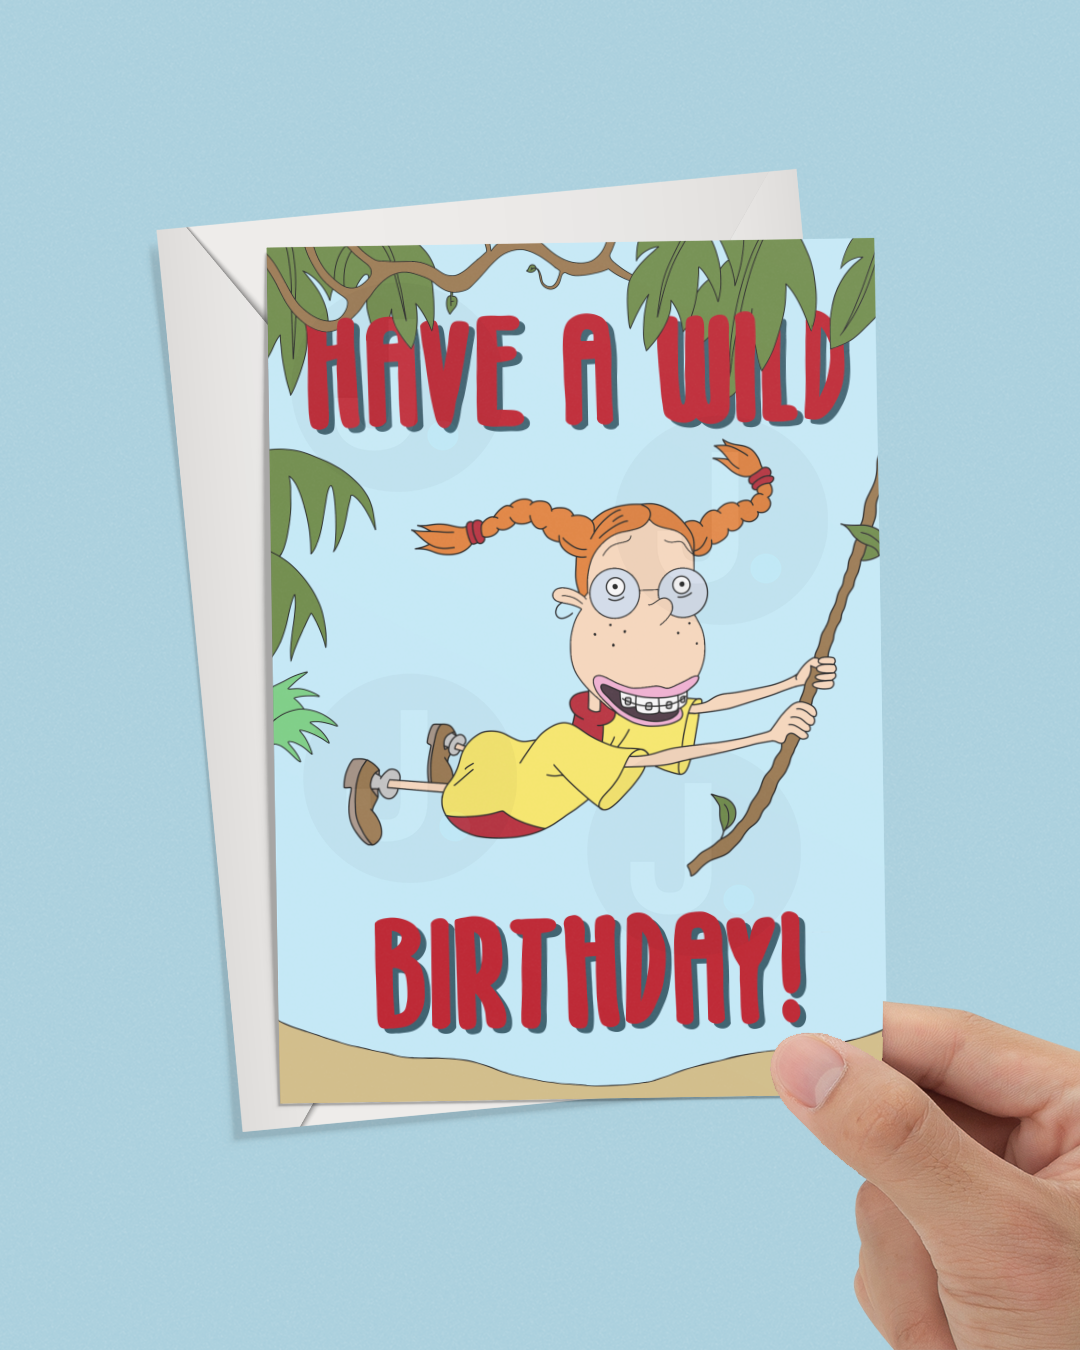 The Wild Thornberrys Inspired Birthday Card - “Have A Wild Birthday!” 1990s Cartoon The Wild Thornberrys Inspired Birthday Card